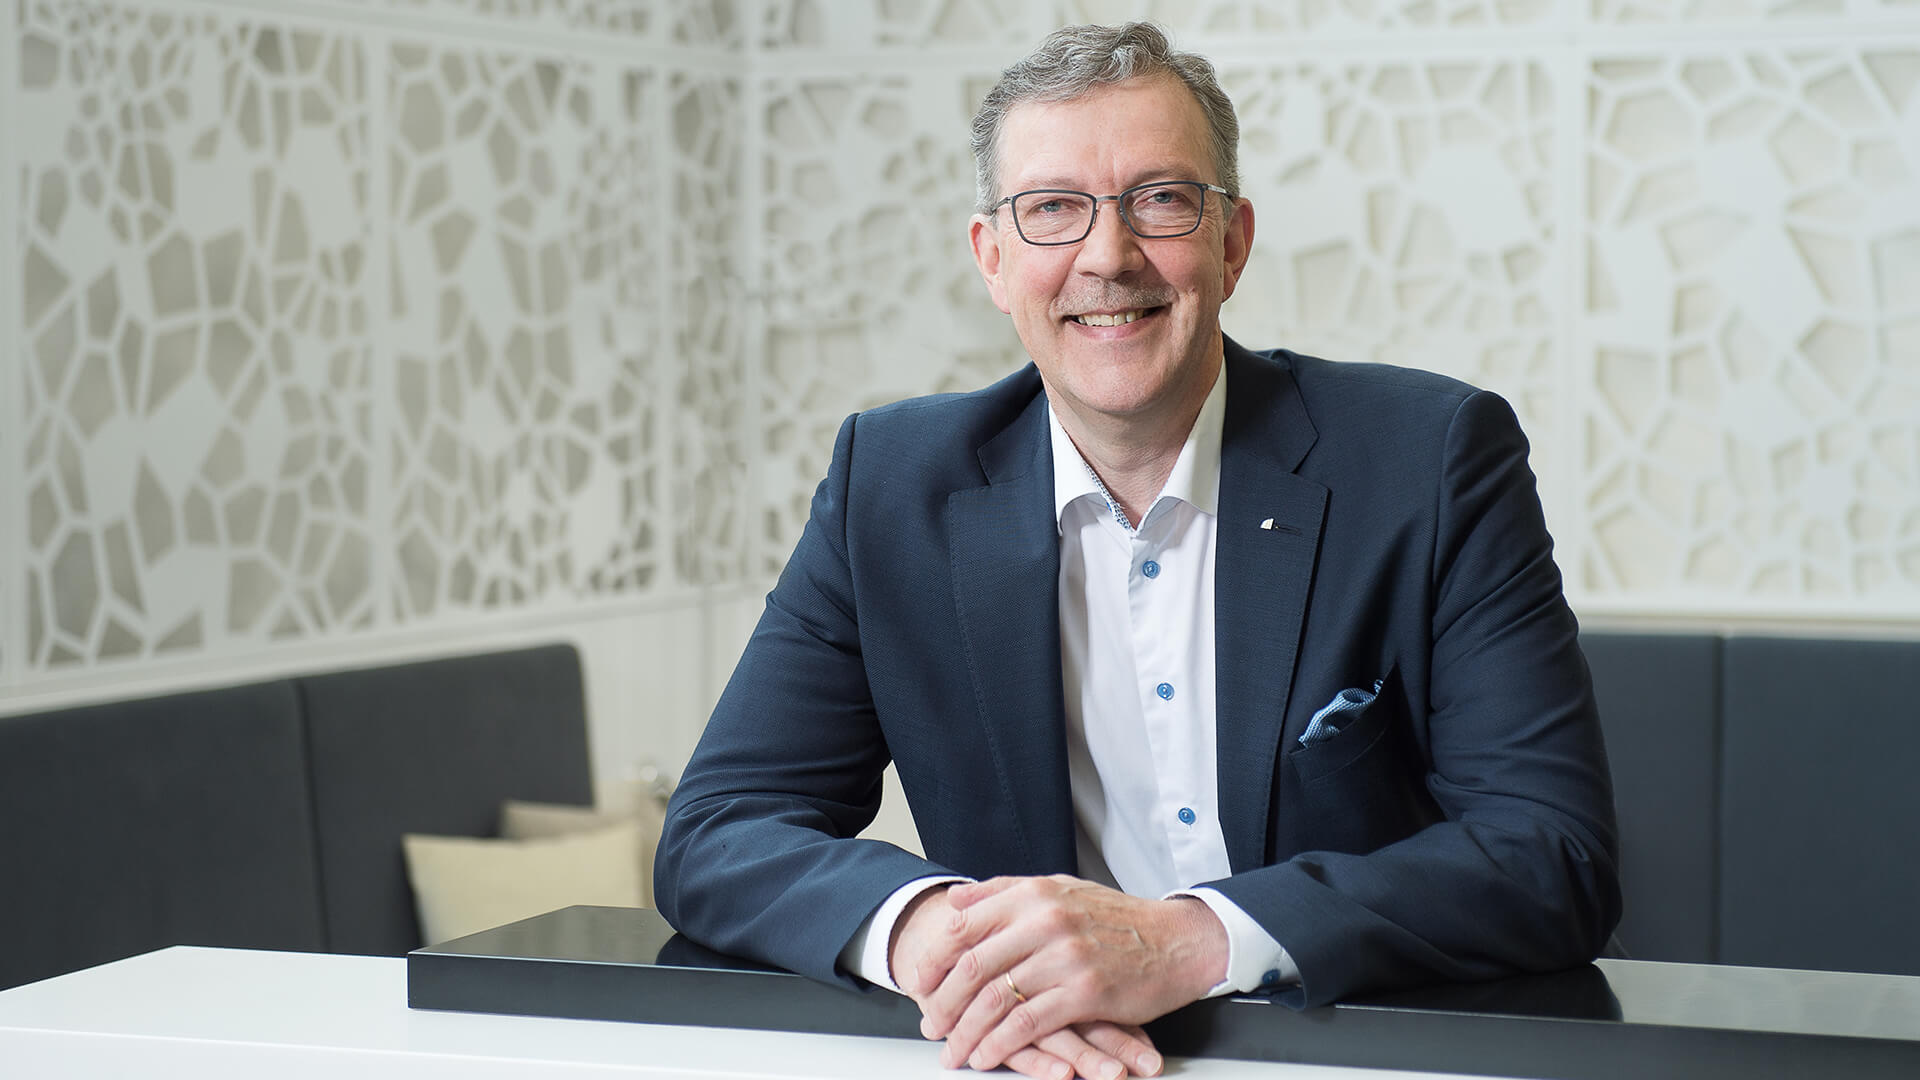 A-Insinöörien toimialajohtaja Juhani Karhu on valittu RTL ry:n hallituksen puheenjohtajaksi.